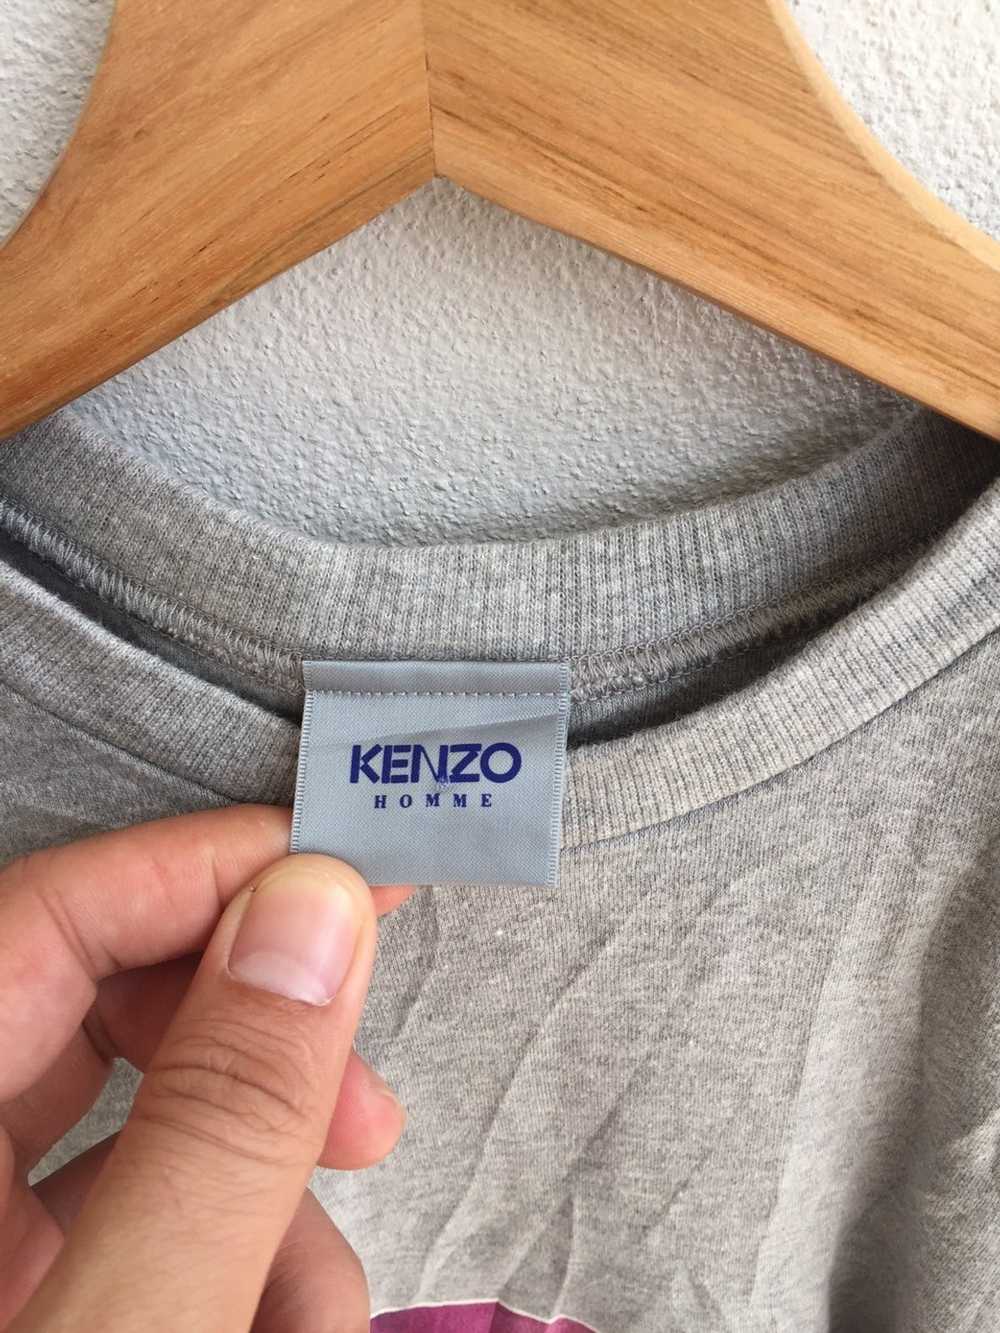 Designer × Kenzo Kenzo shirt/ Kenzo Homme shirt - image 4